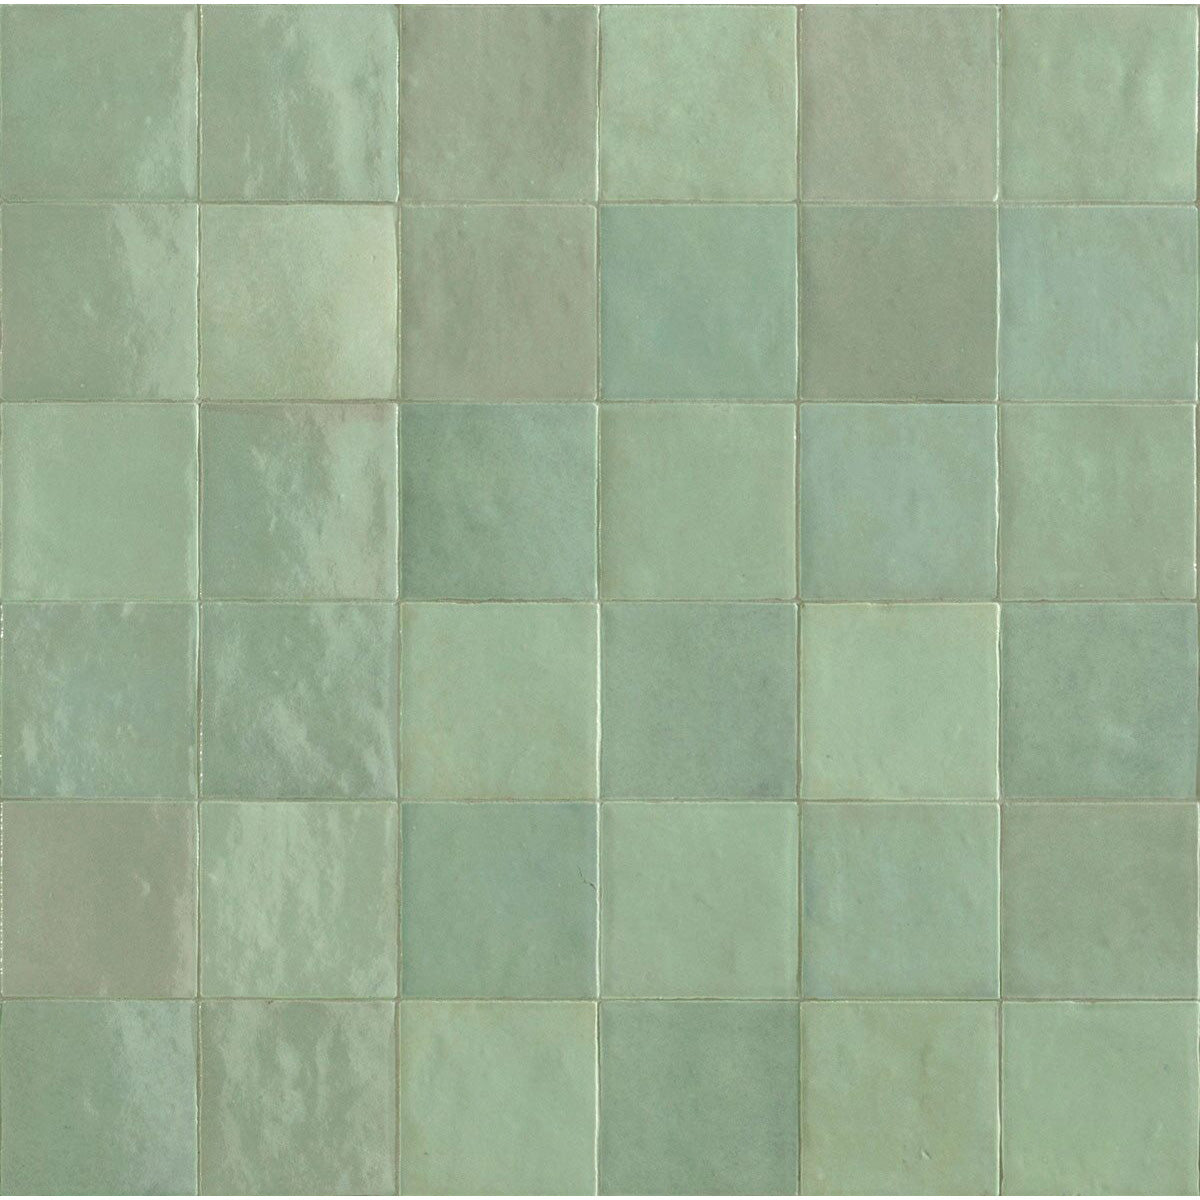 Marazzi - Zellige Neo 4 in. x 4 in. Glazed Ceramic Wall Tile - Turchese